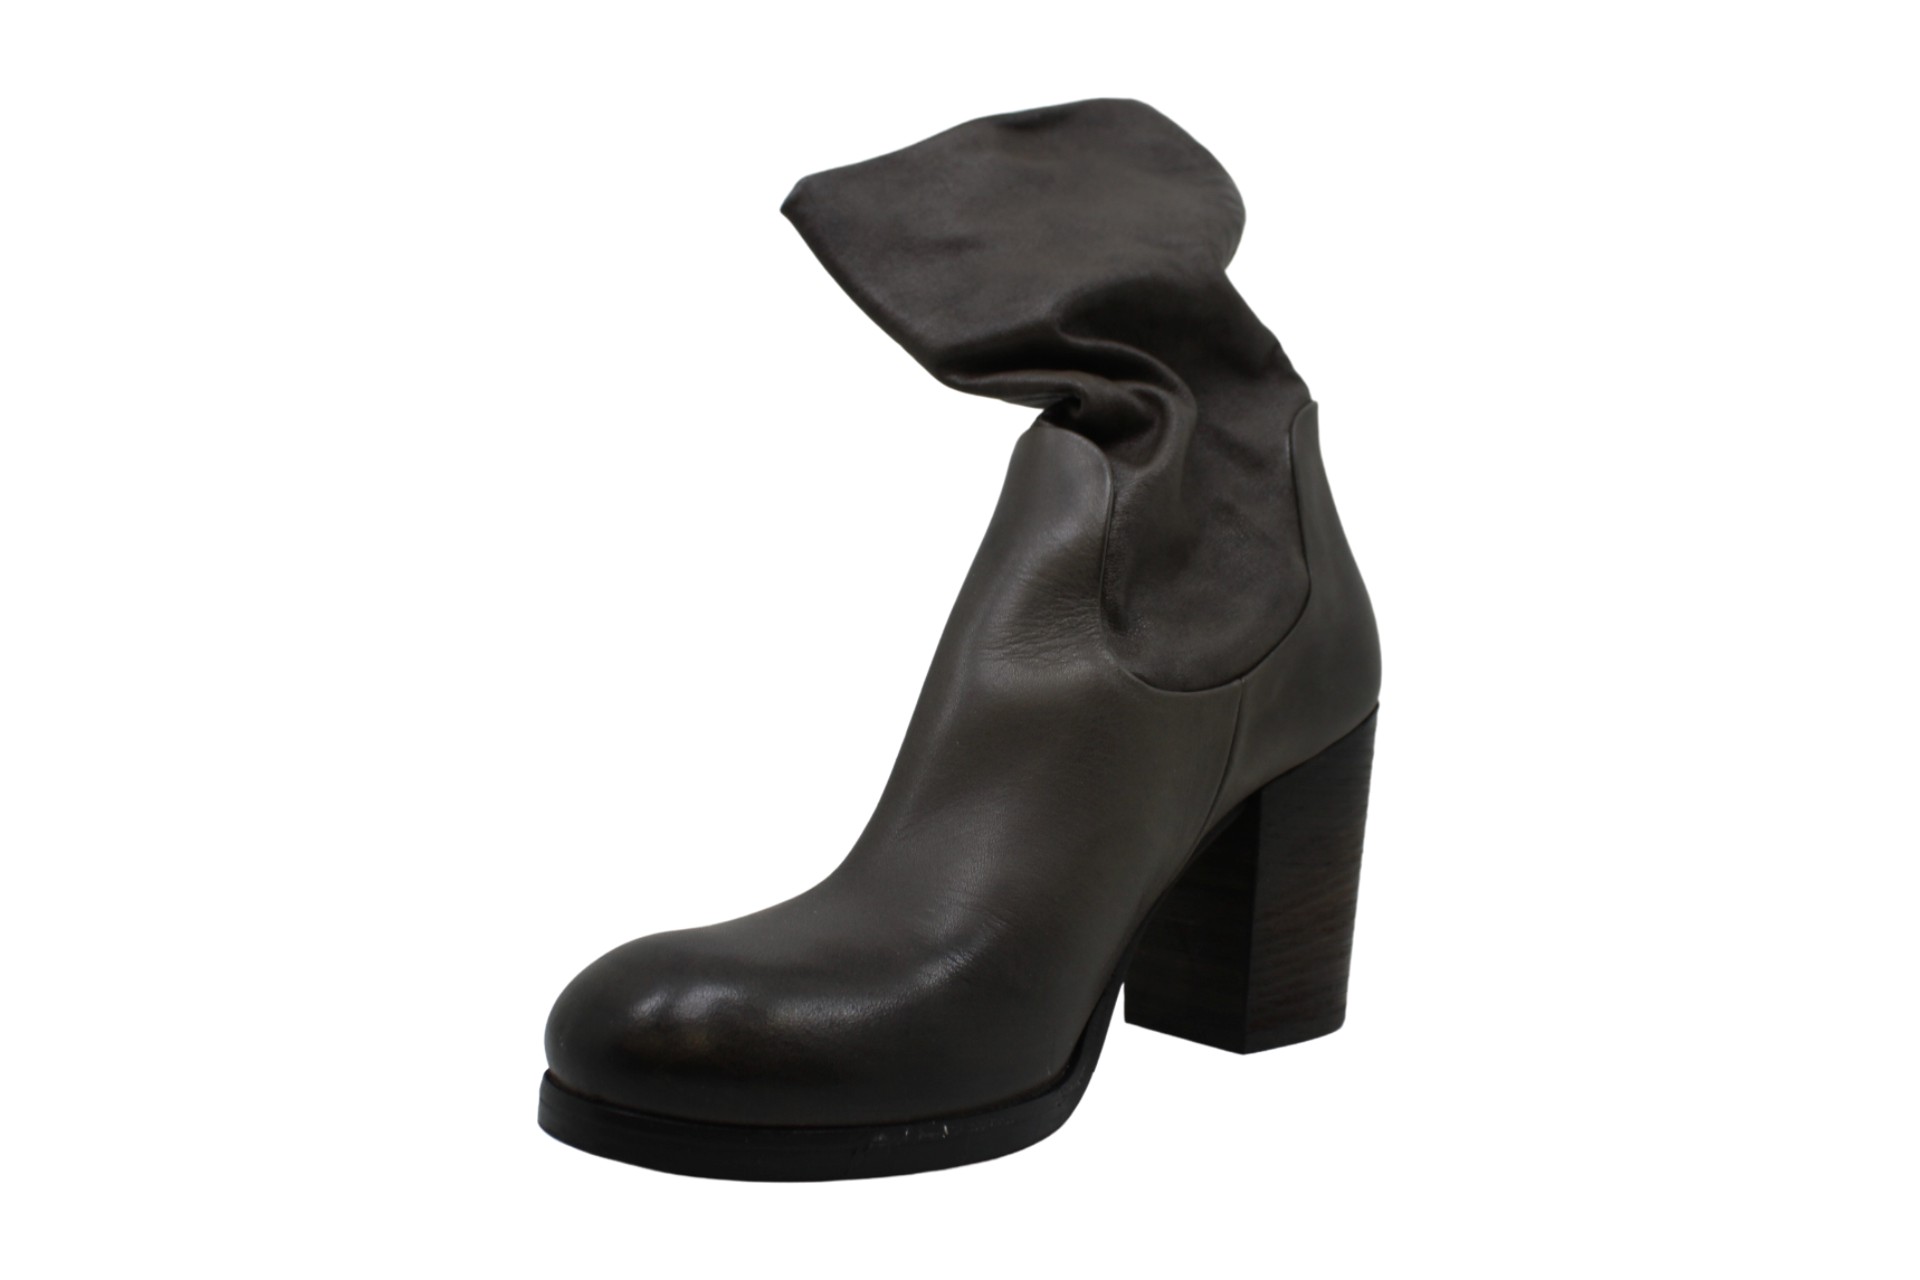 Keyshia Cole by Steve Madden Womens Boots in Tan Color, Size 7 IAP | eBay